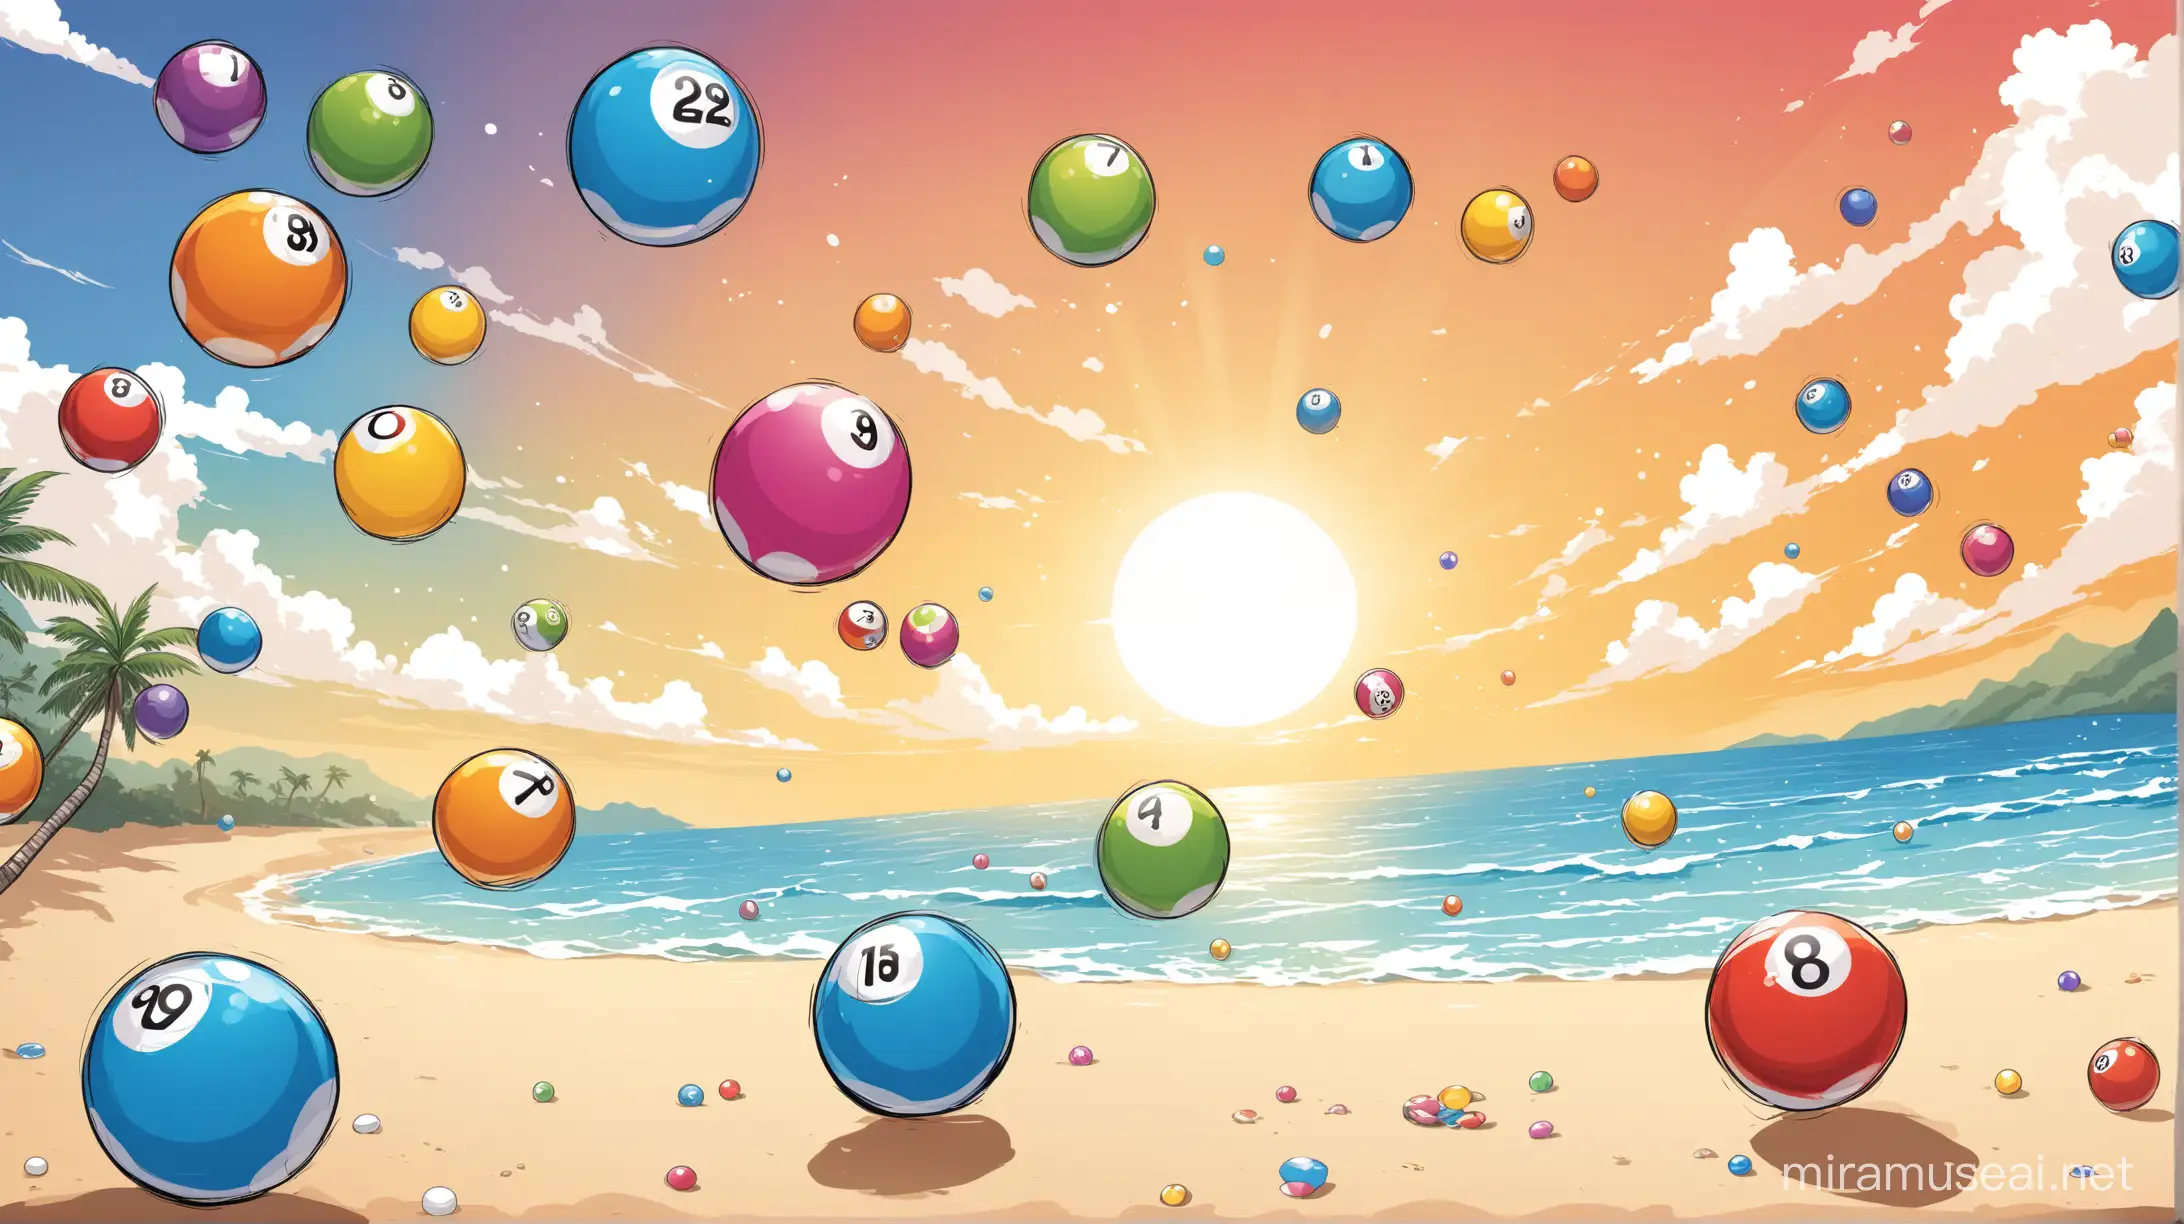 Bingo balls flying illustation in environment, beach background cartoonist images